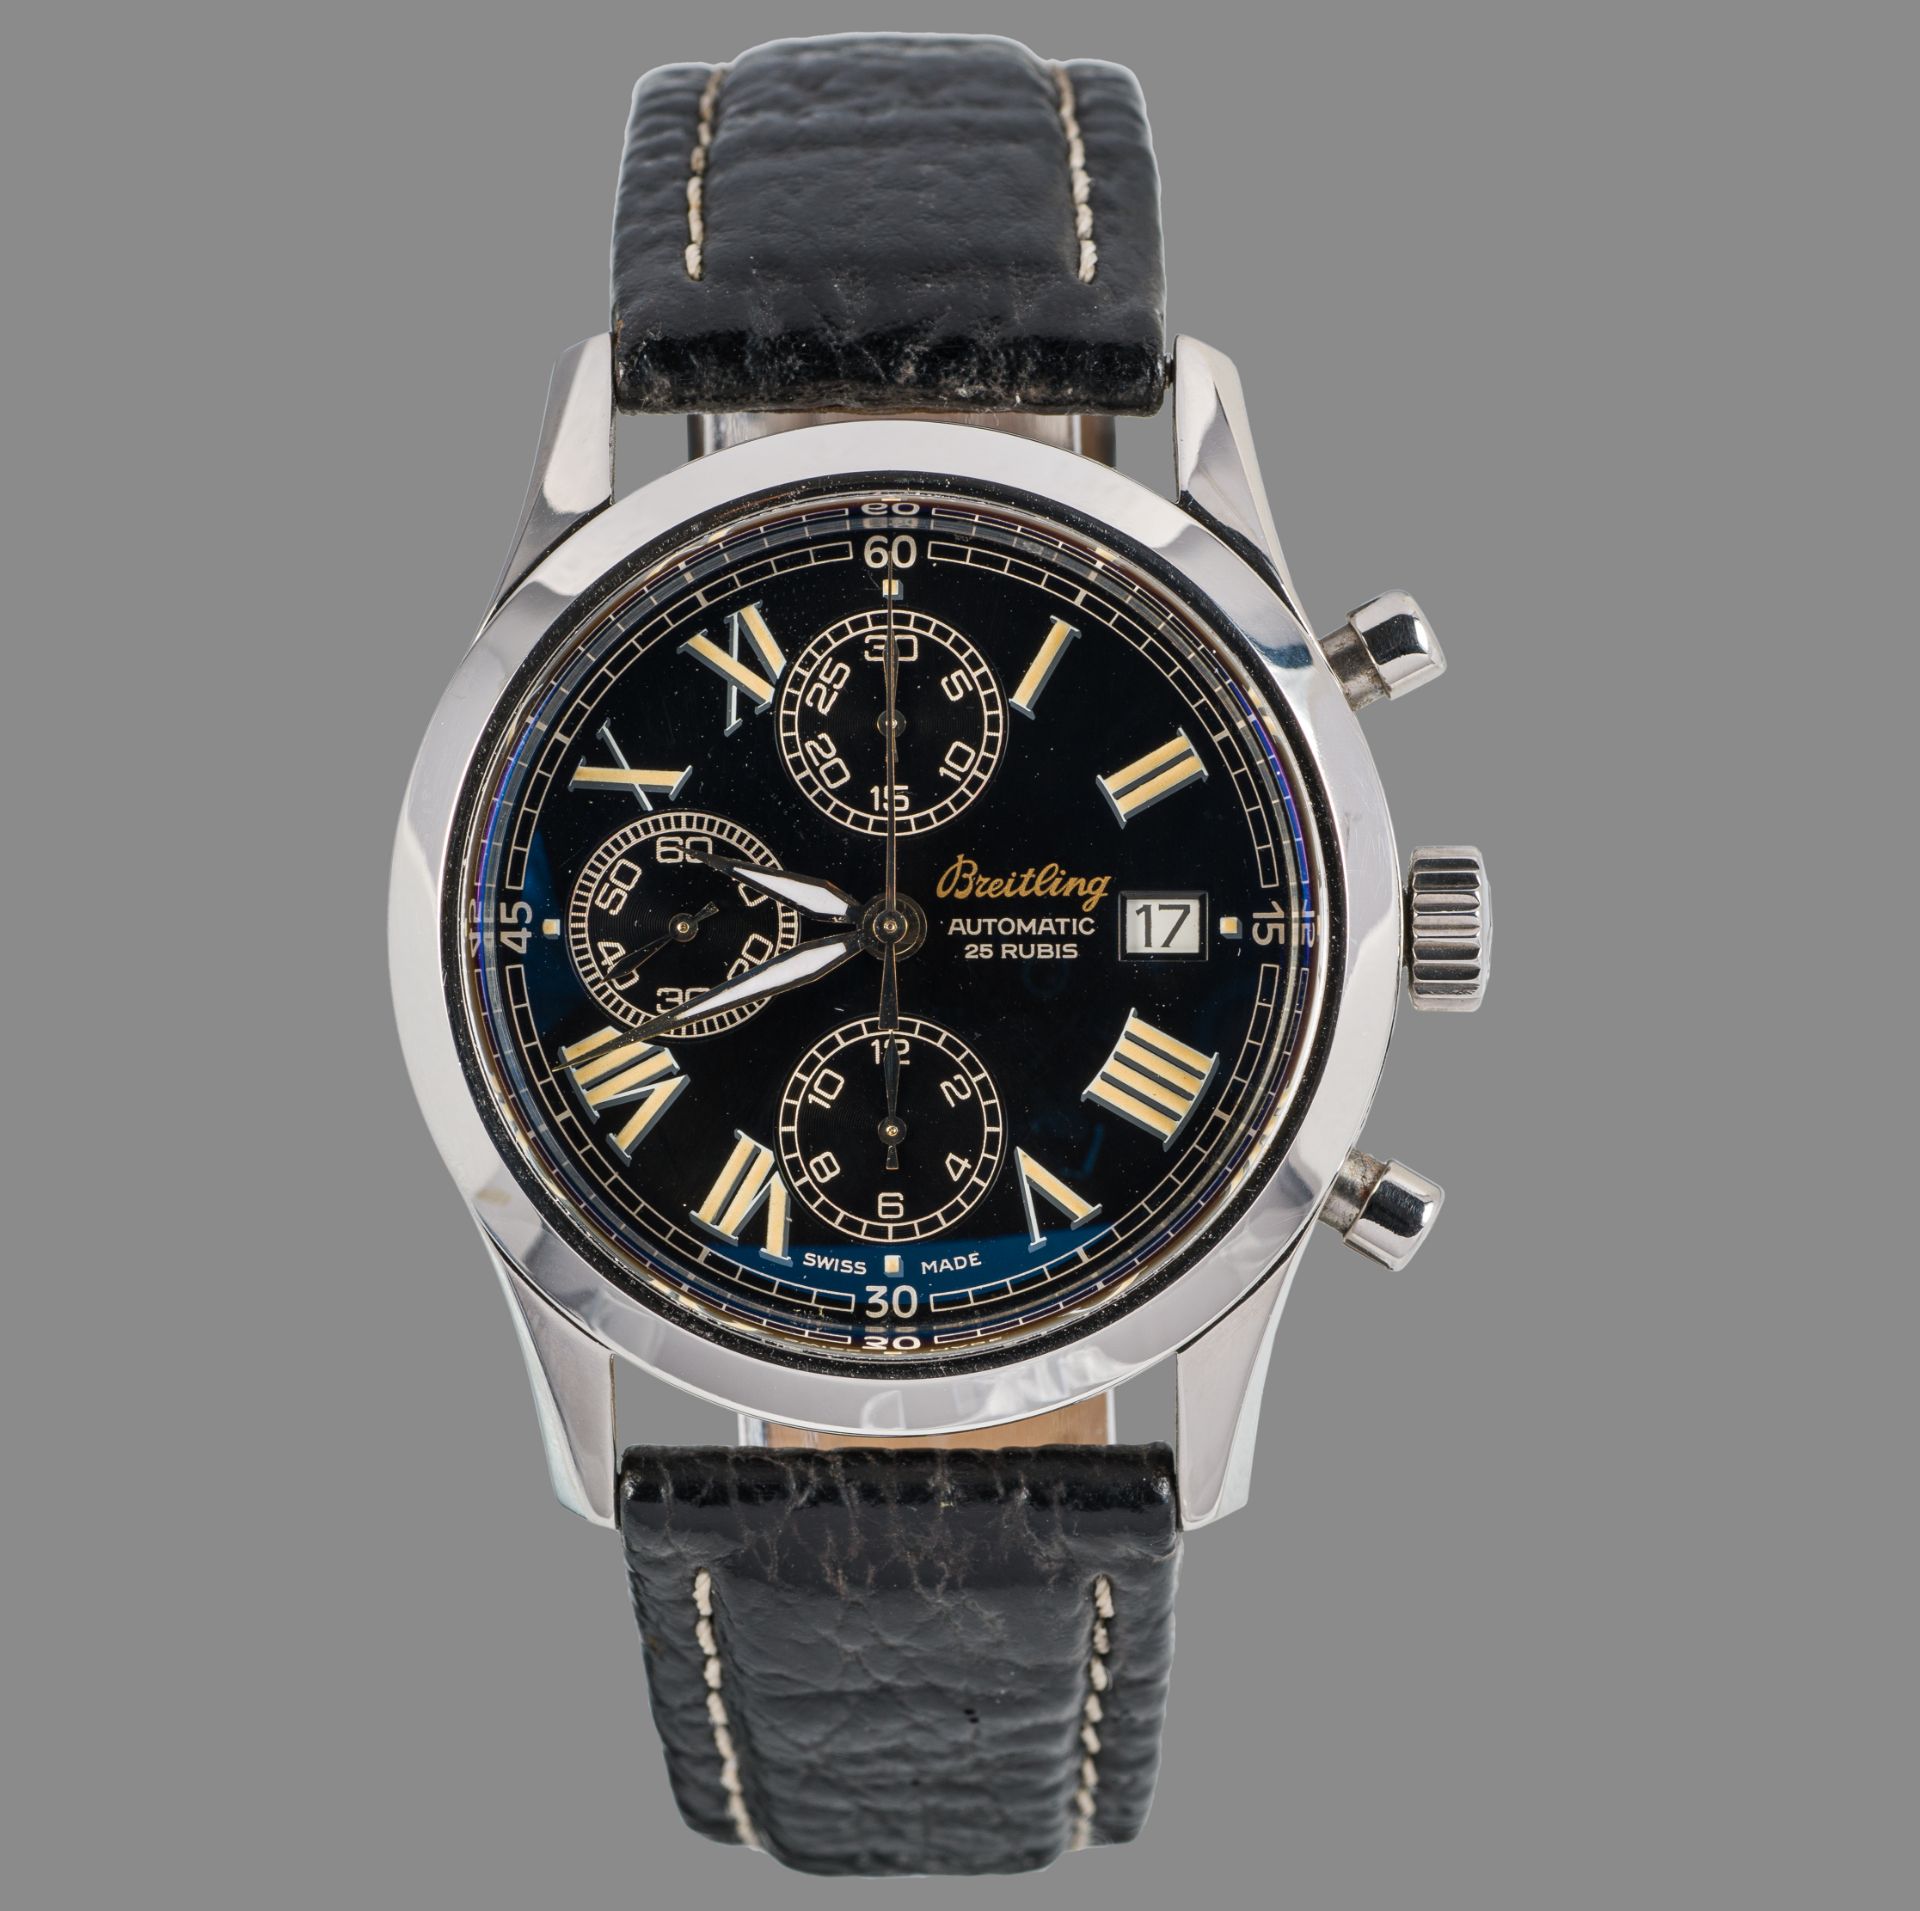 Breitling: Men's wristwatch "Grand Premier" chronograph